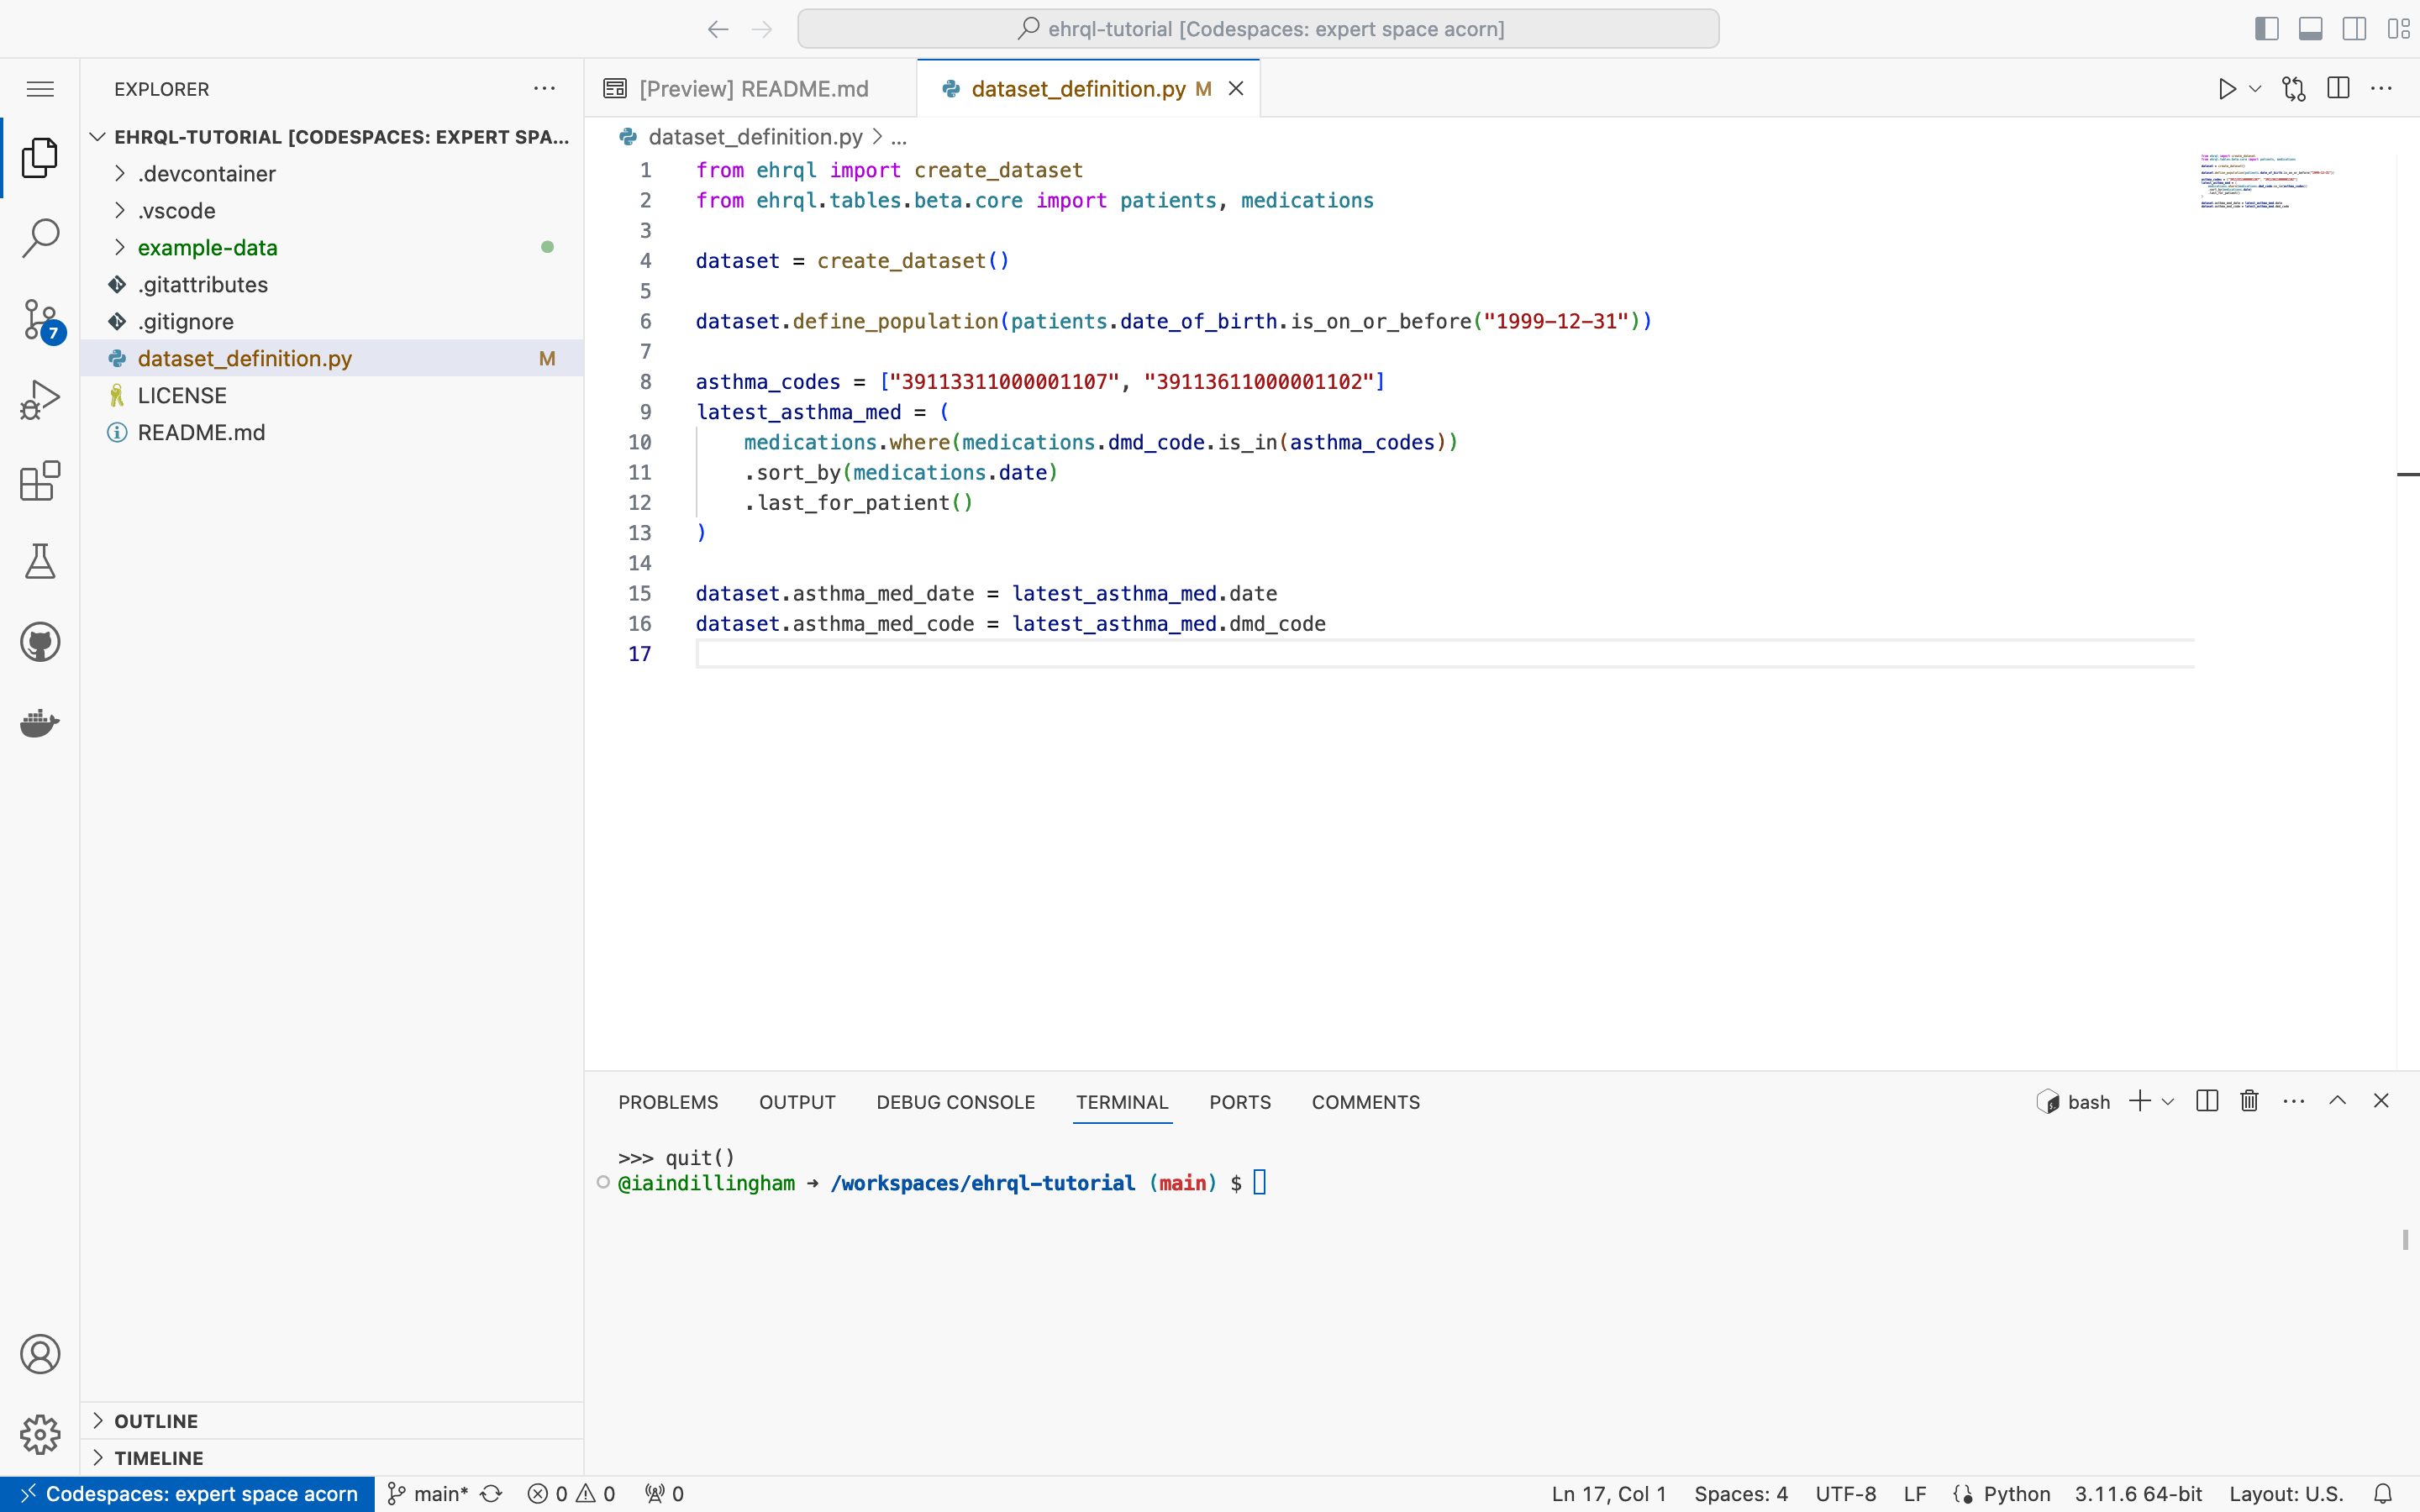 A screenshot of VS Code, showing the terminal